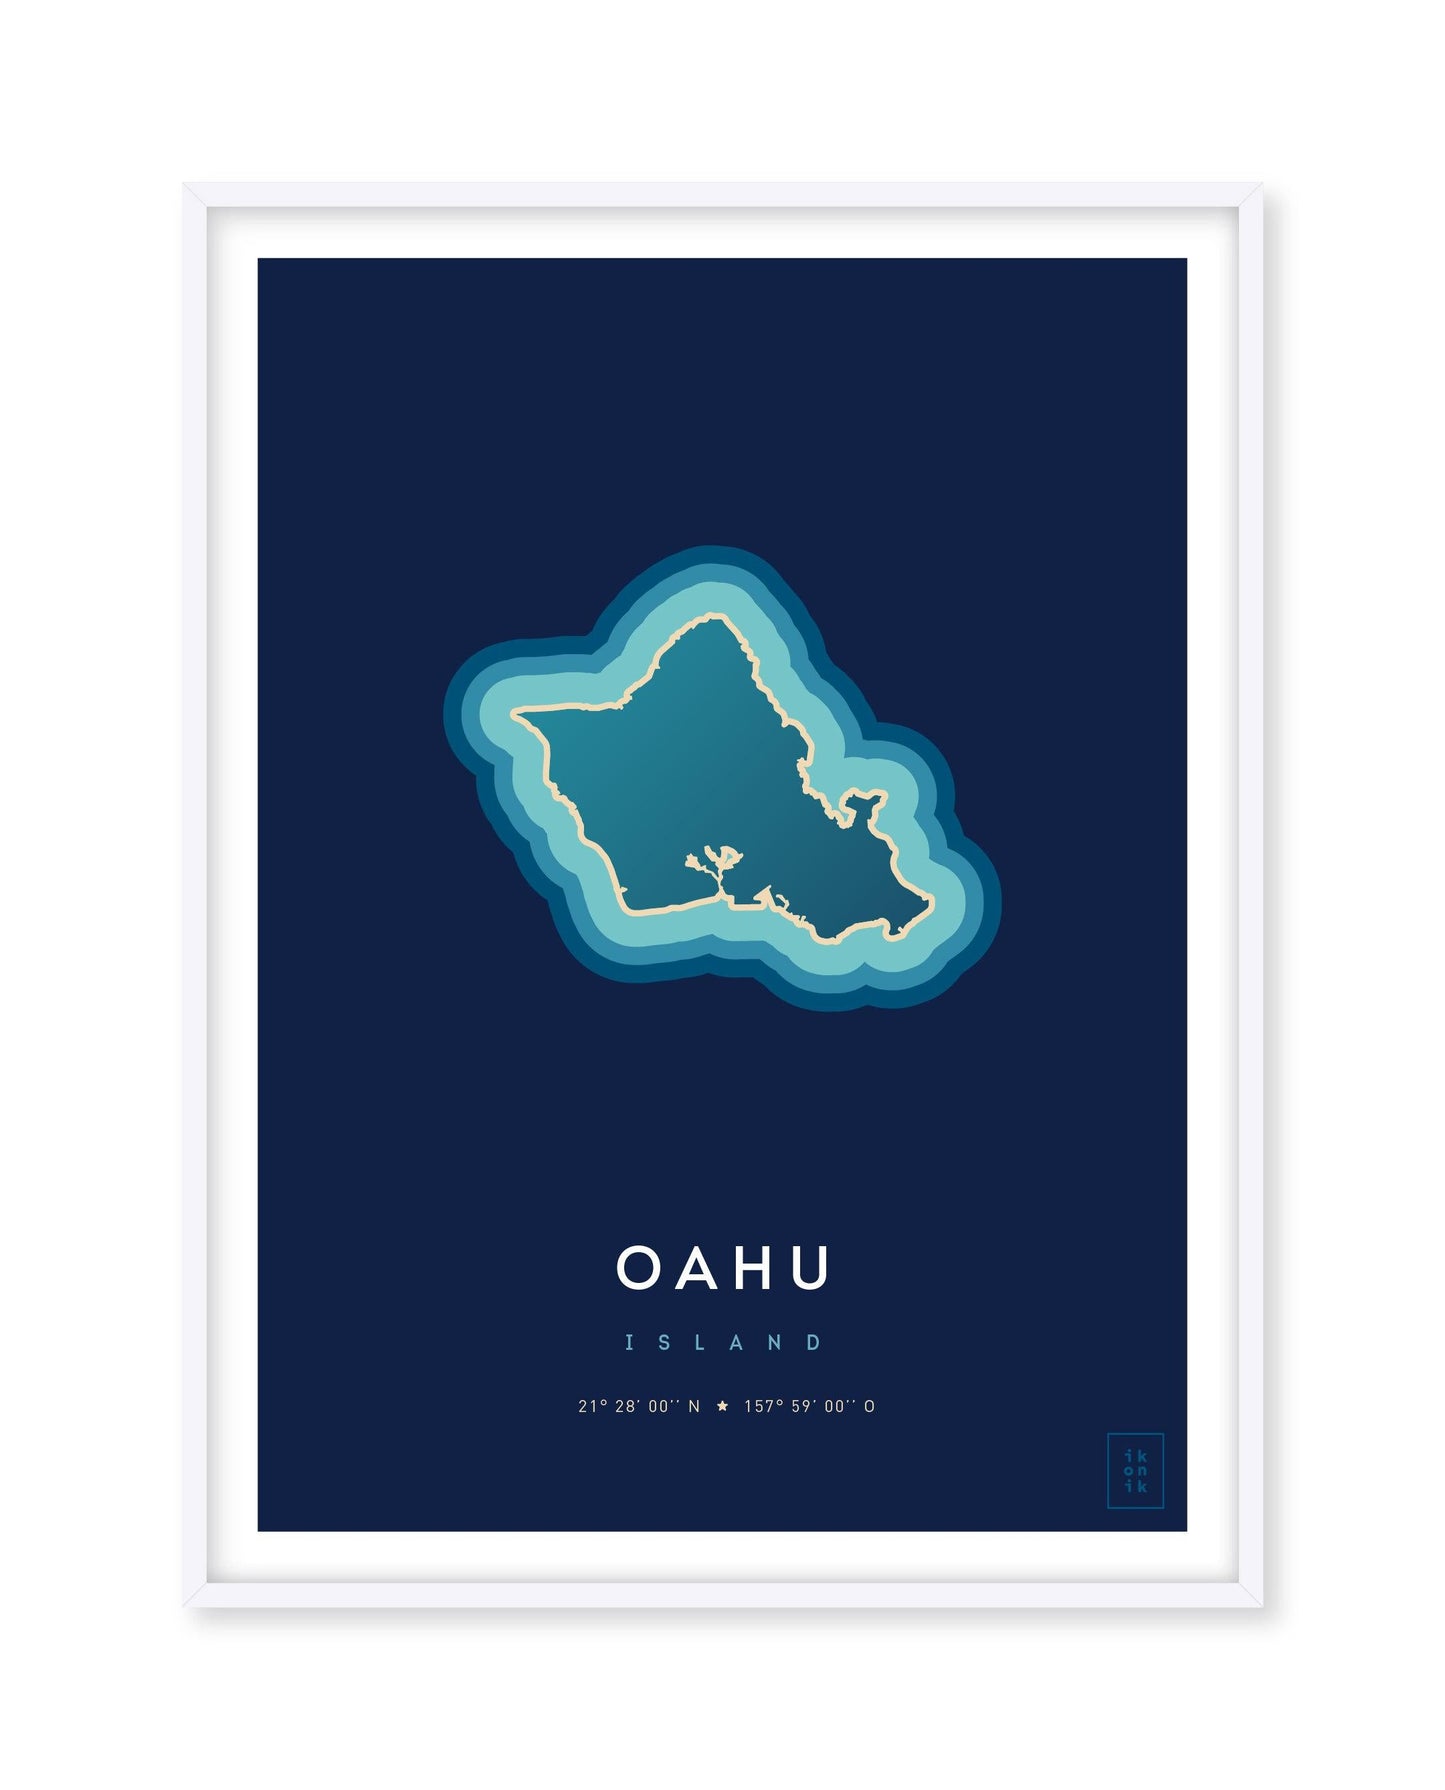 Oahu island poster